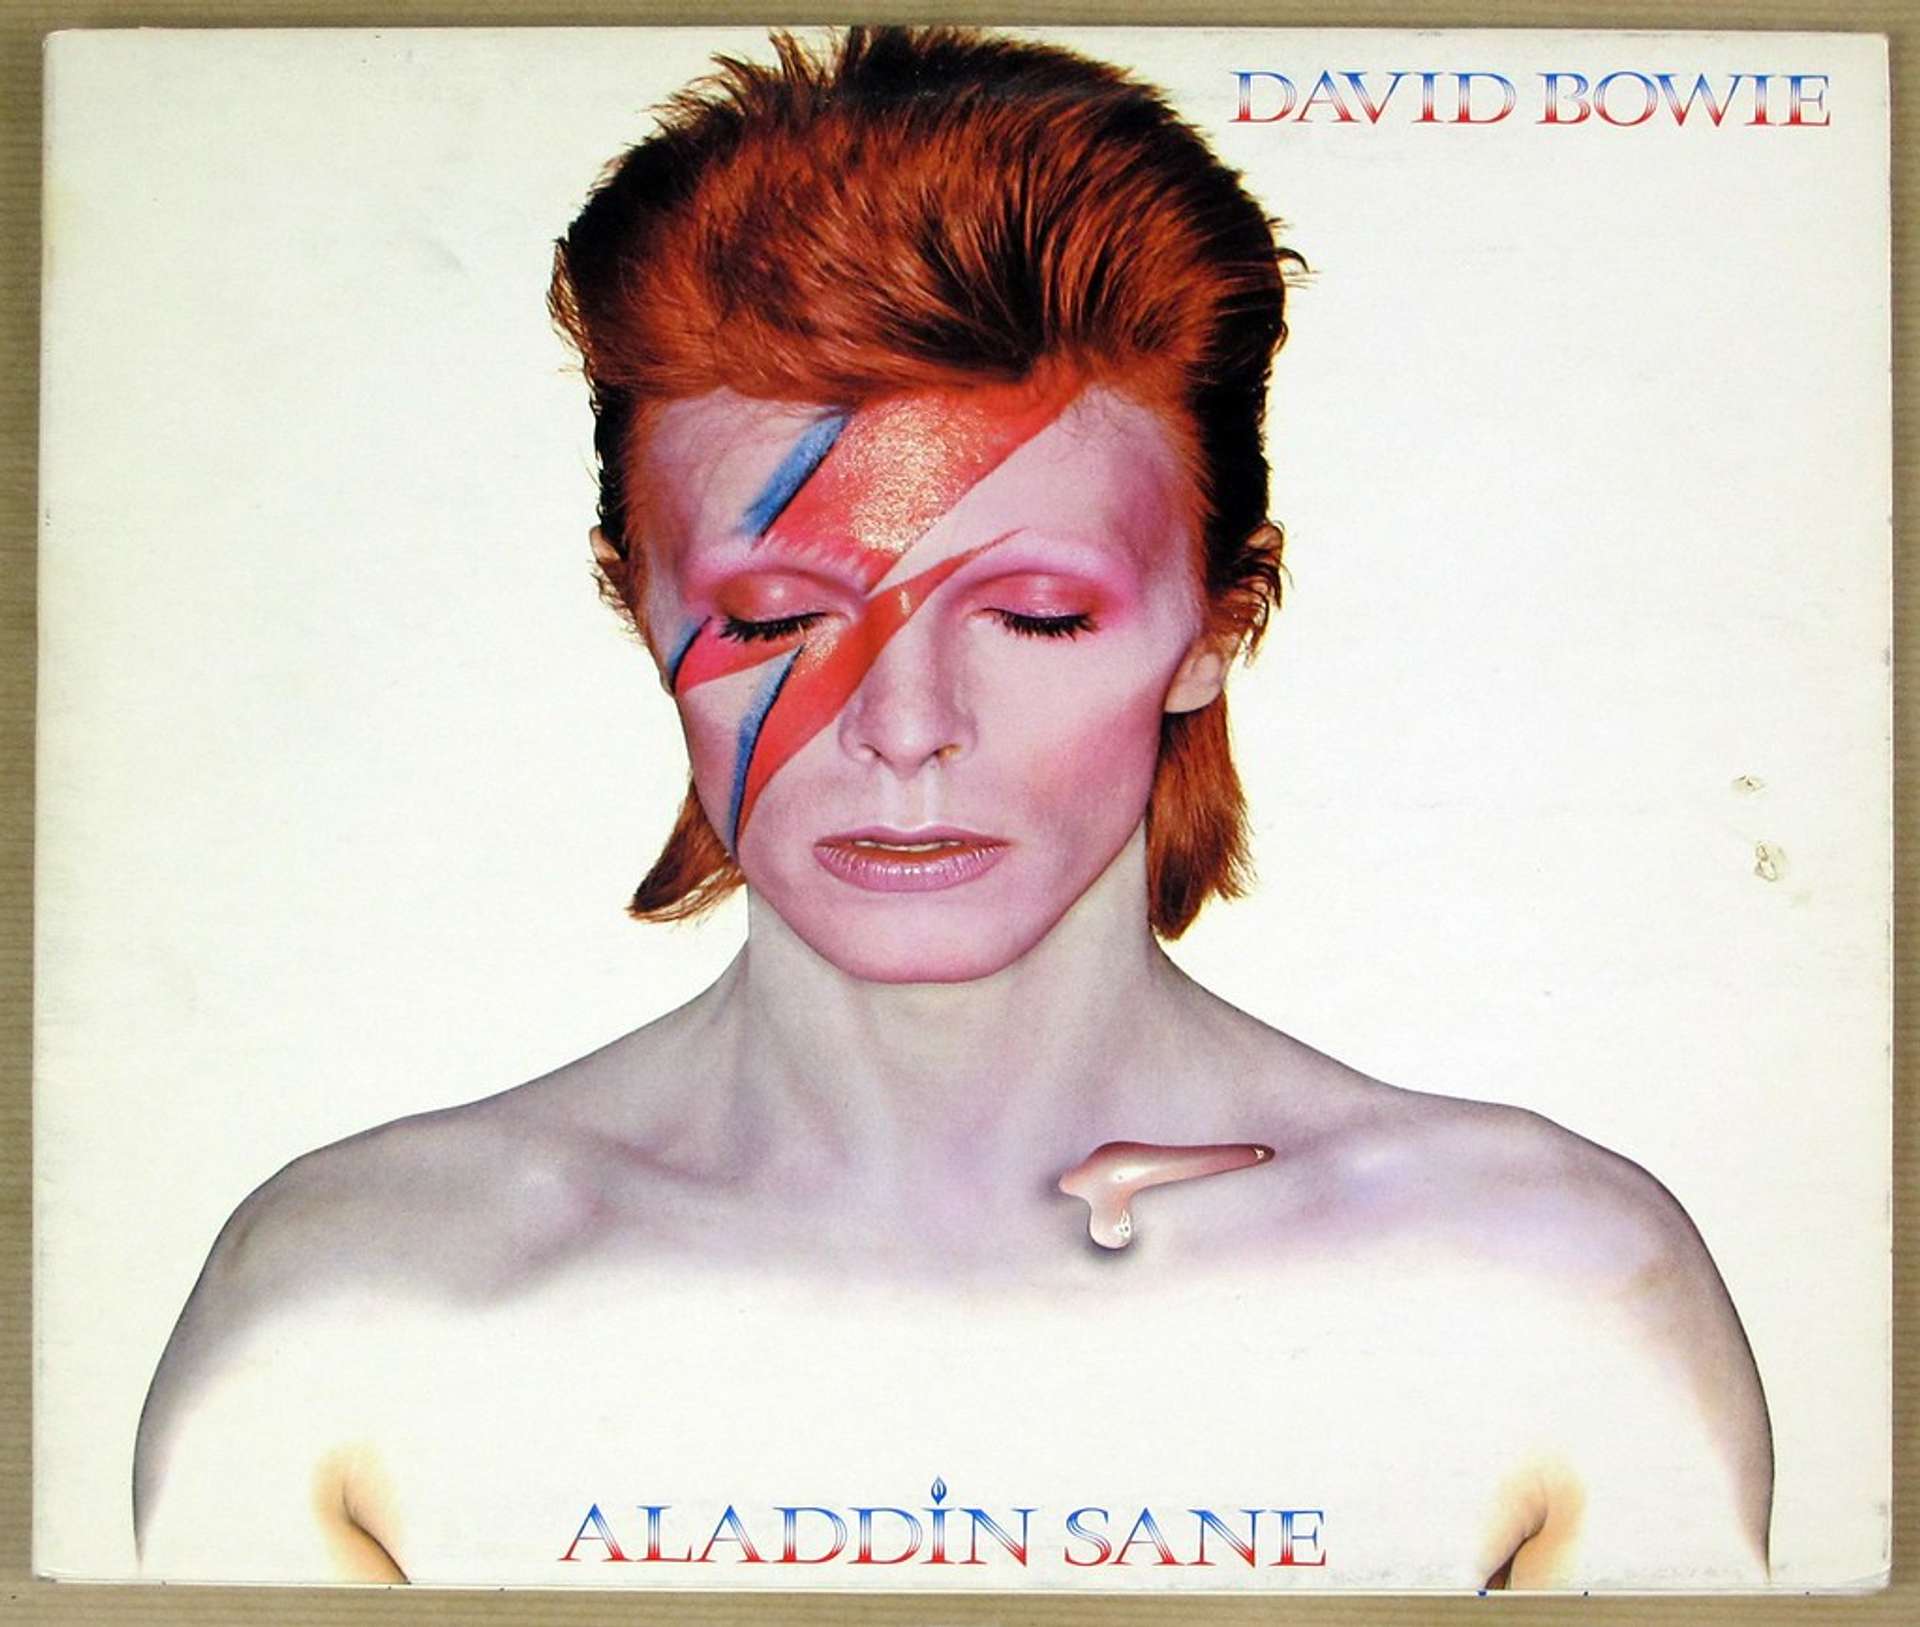 Cover art for David Bowie's 1973 album “Aladdin Sane”.